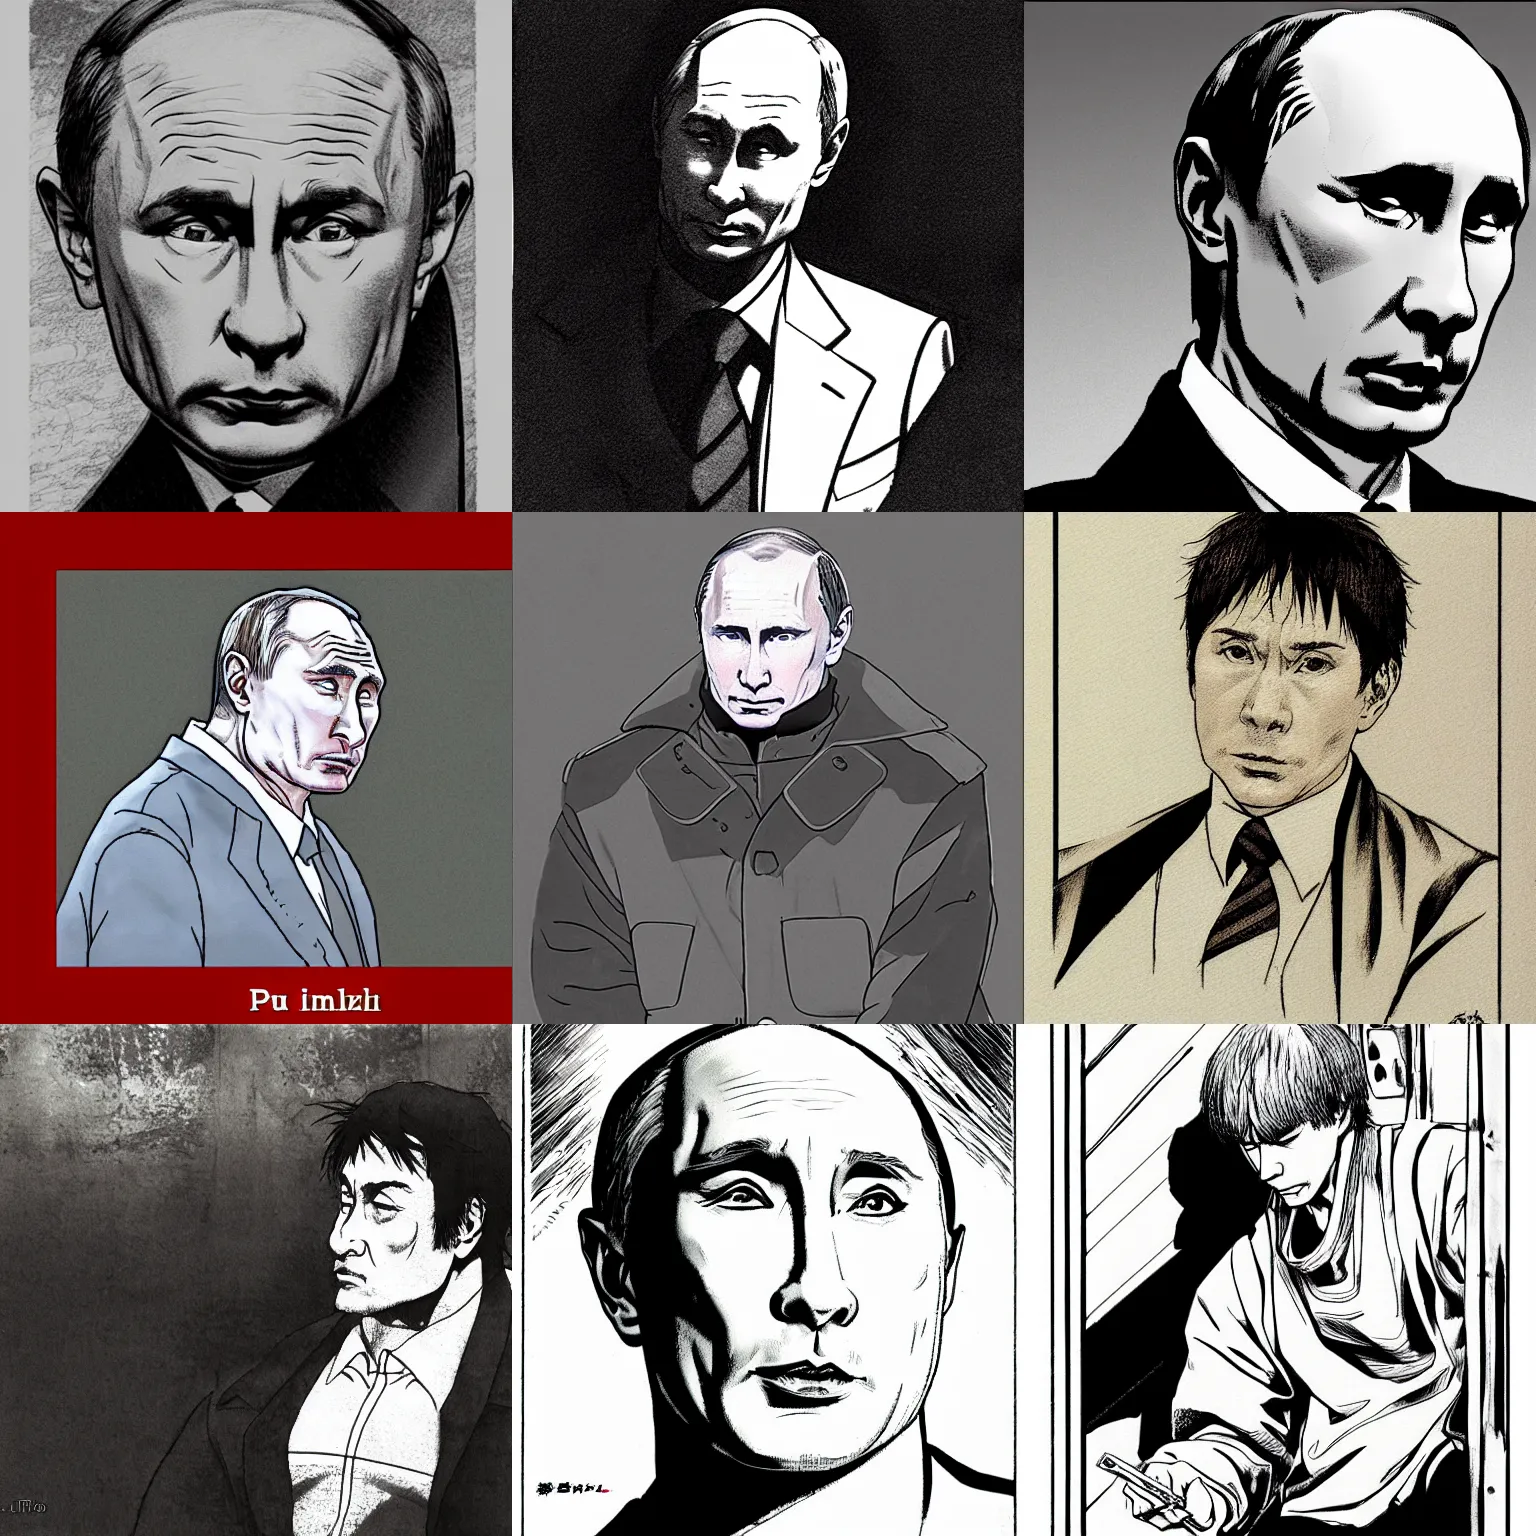 Prompt: Putin illustration by Takehiko Inoue, cinematic